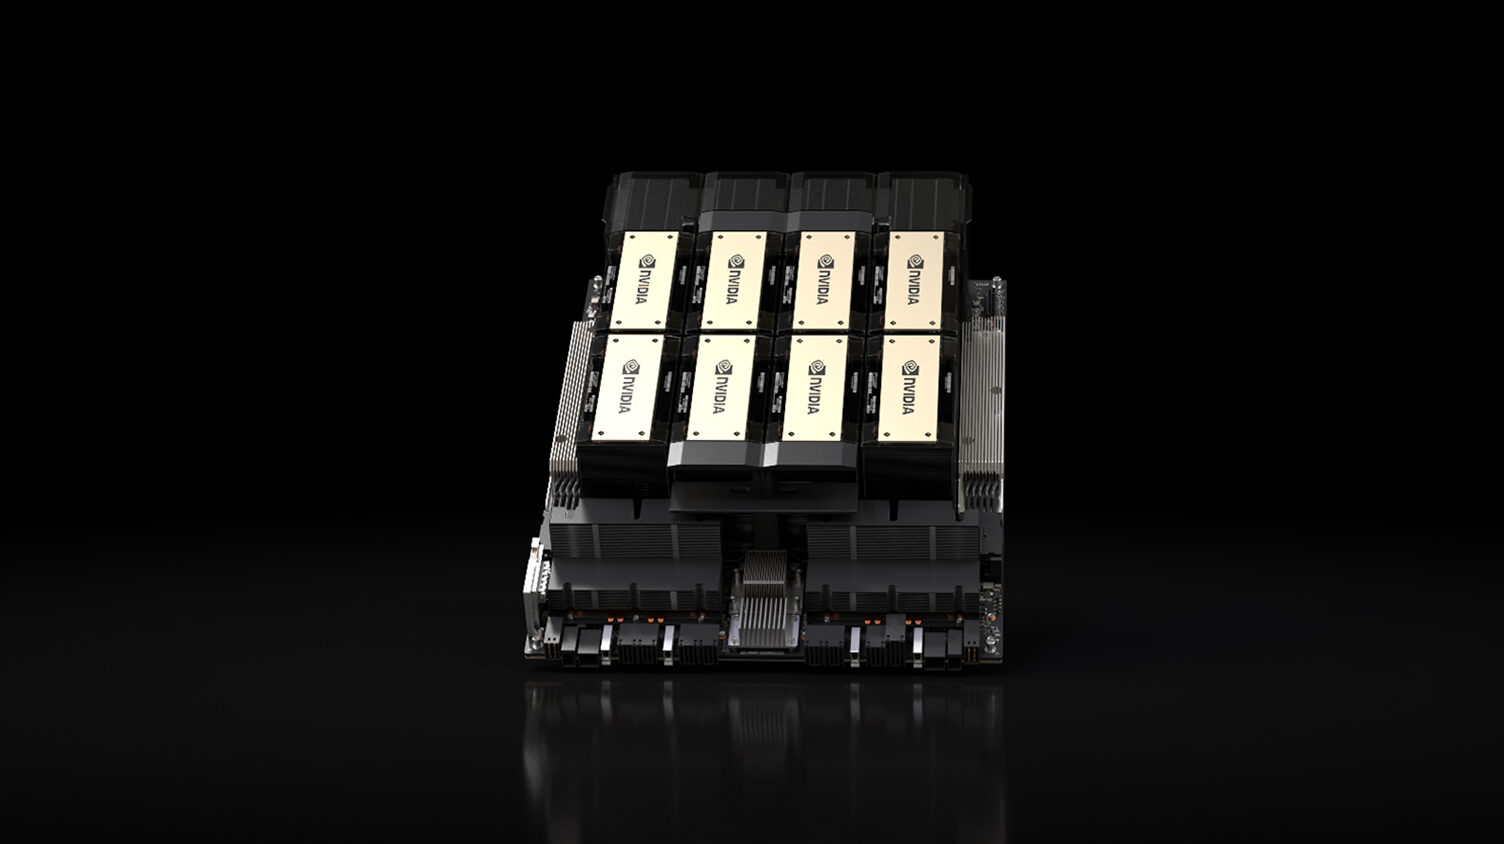 An image of an NVIDIA H200 Tensor Core GPU.